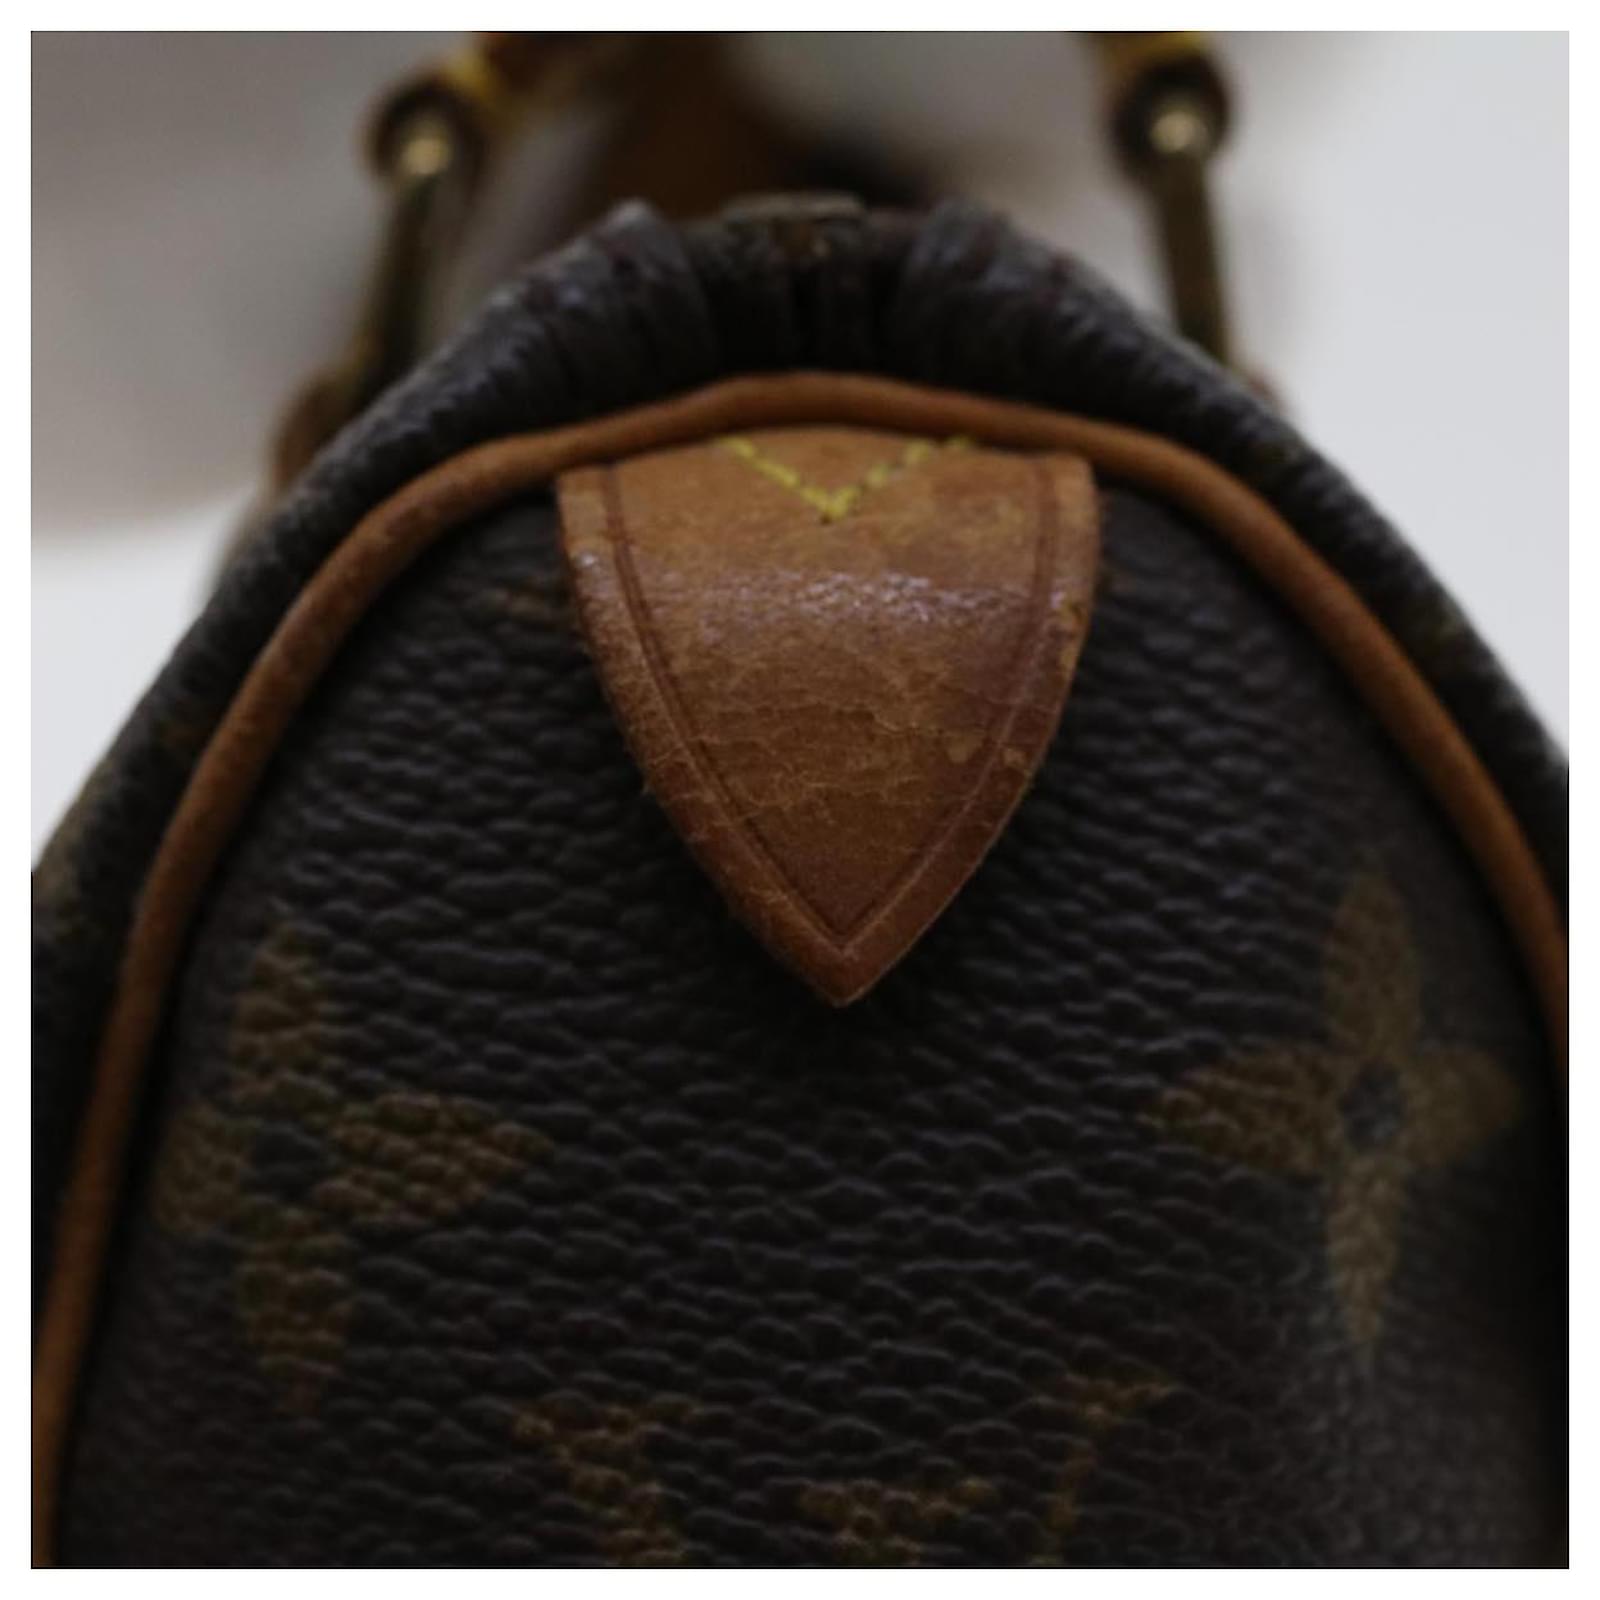 Louis Vuitton Epi Speedy 35 Handbag Boston Bag M42993 Kenya Brown Leat